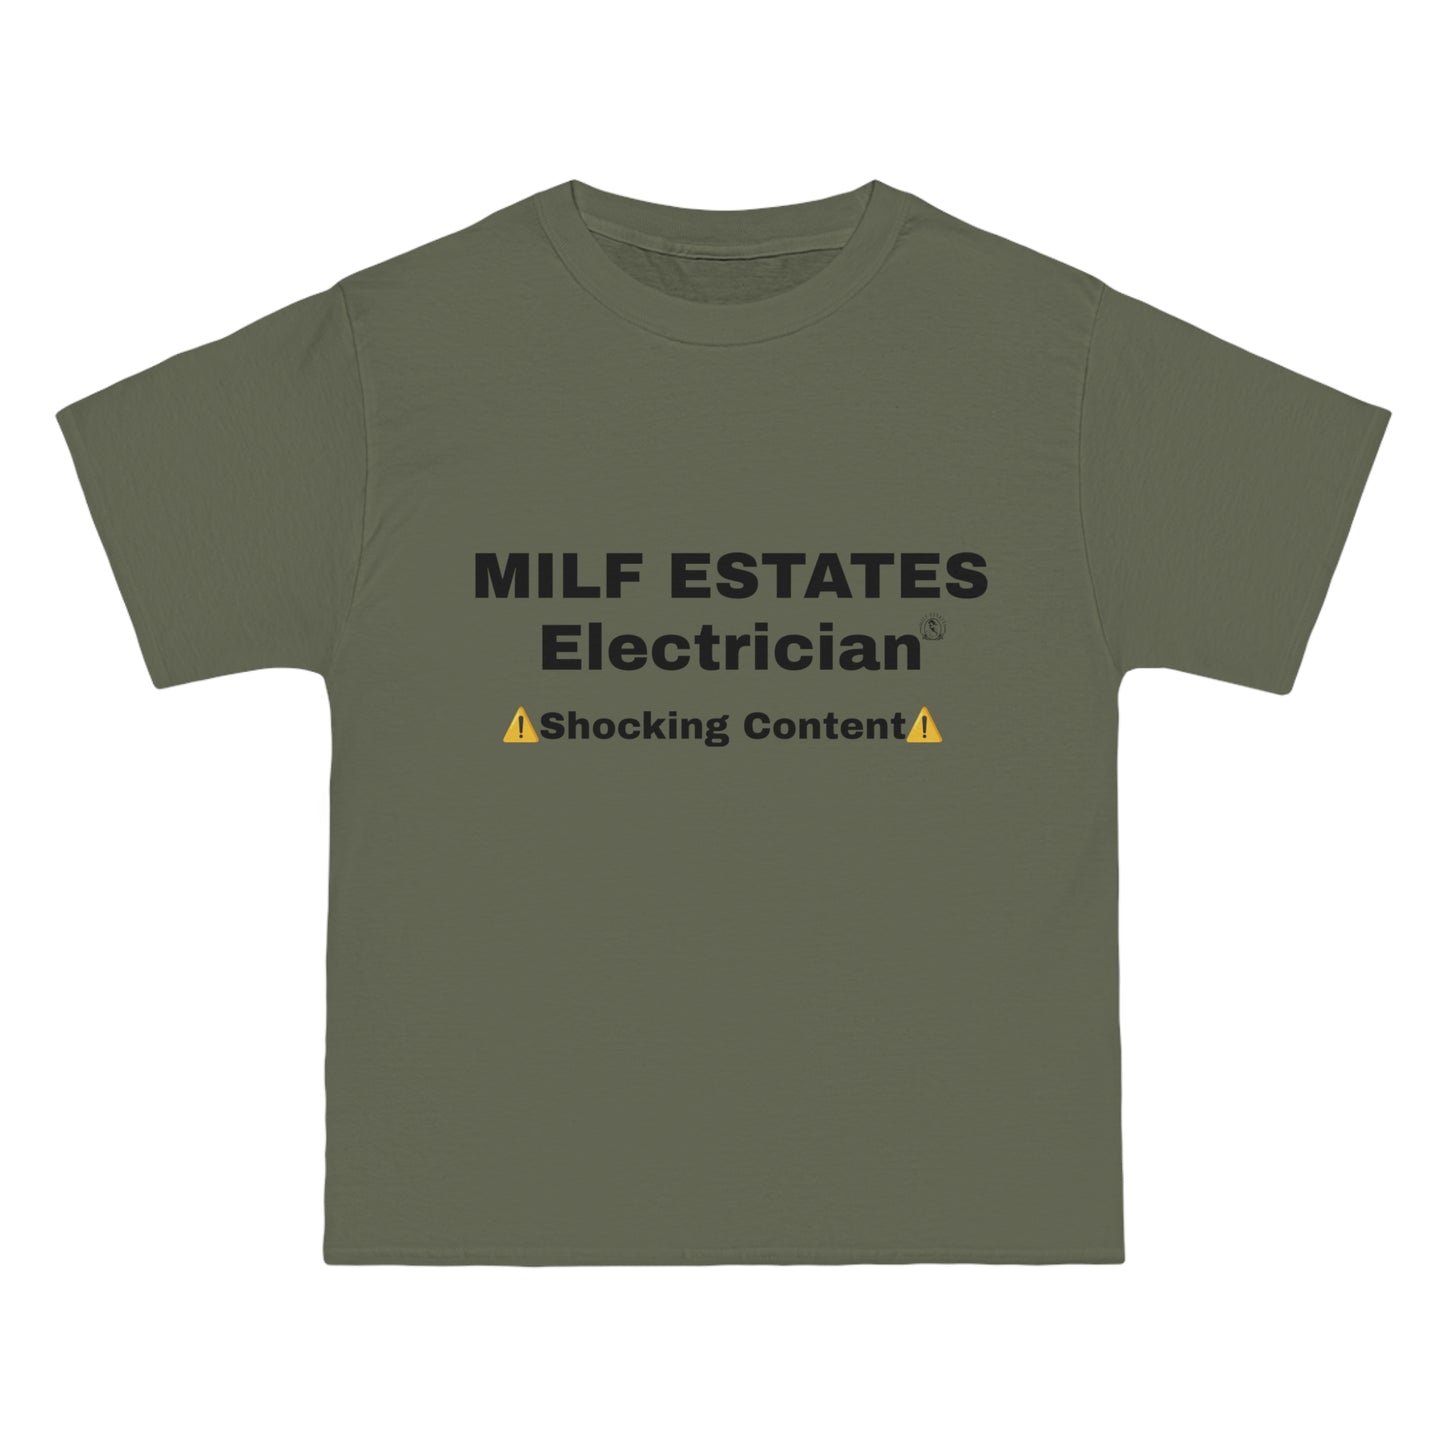 MILF ESTATES Electrician  !Shocking Content!